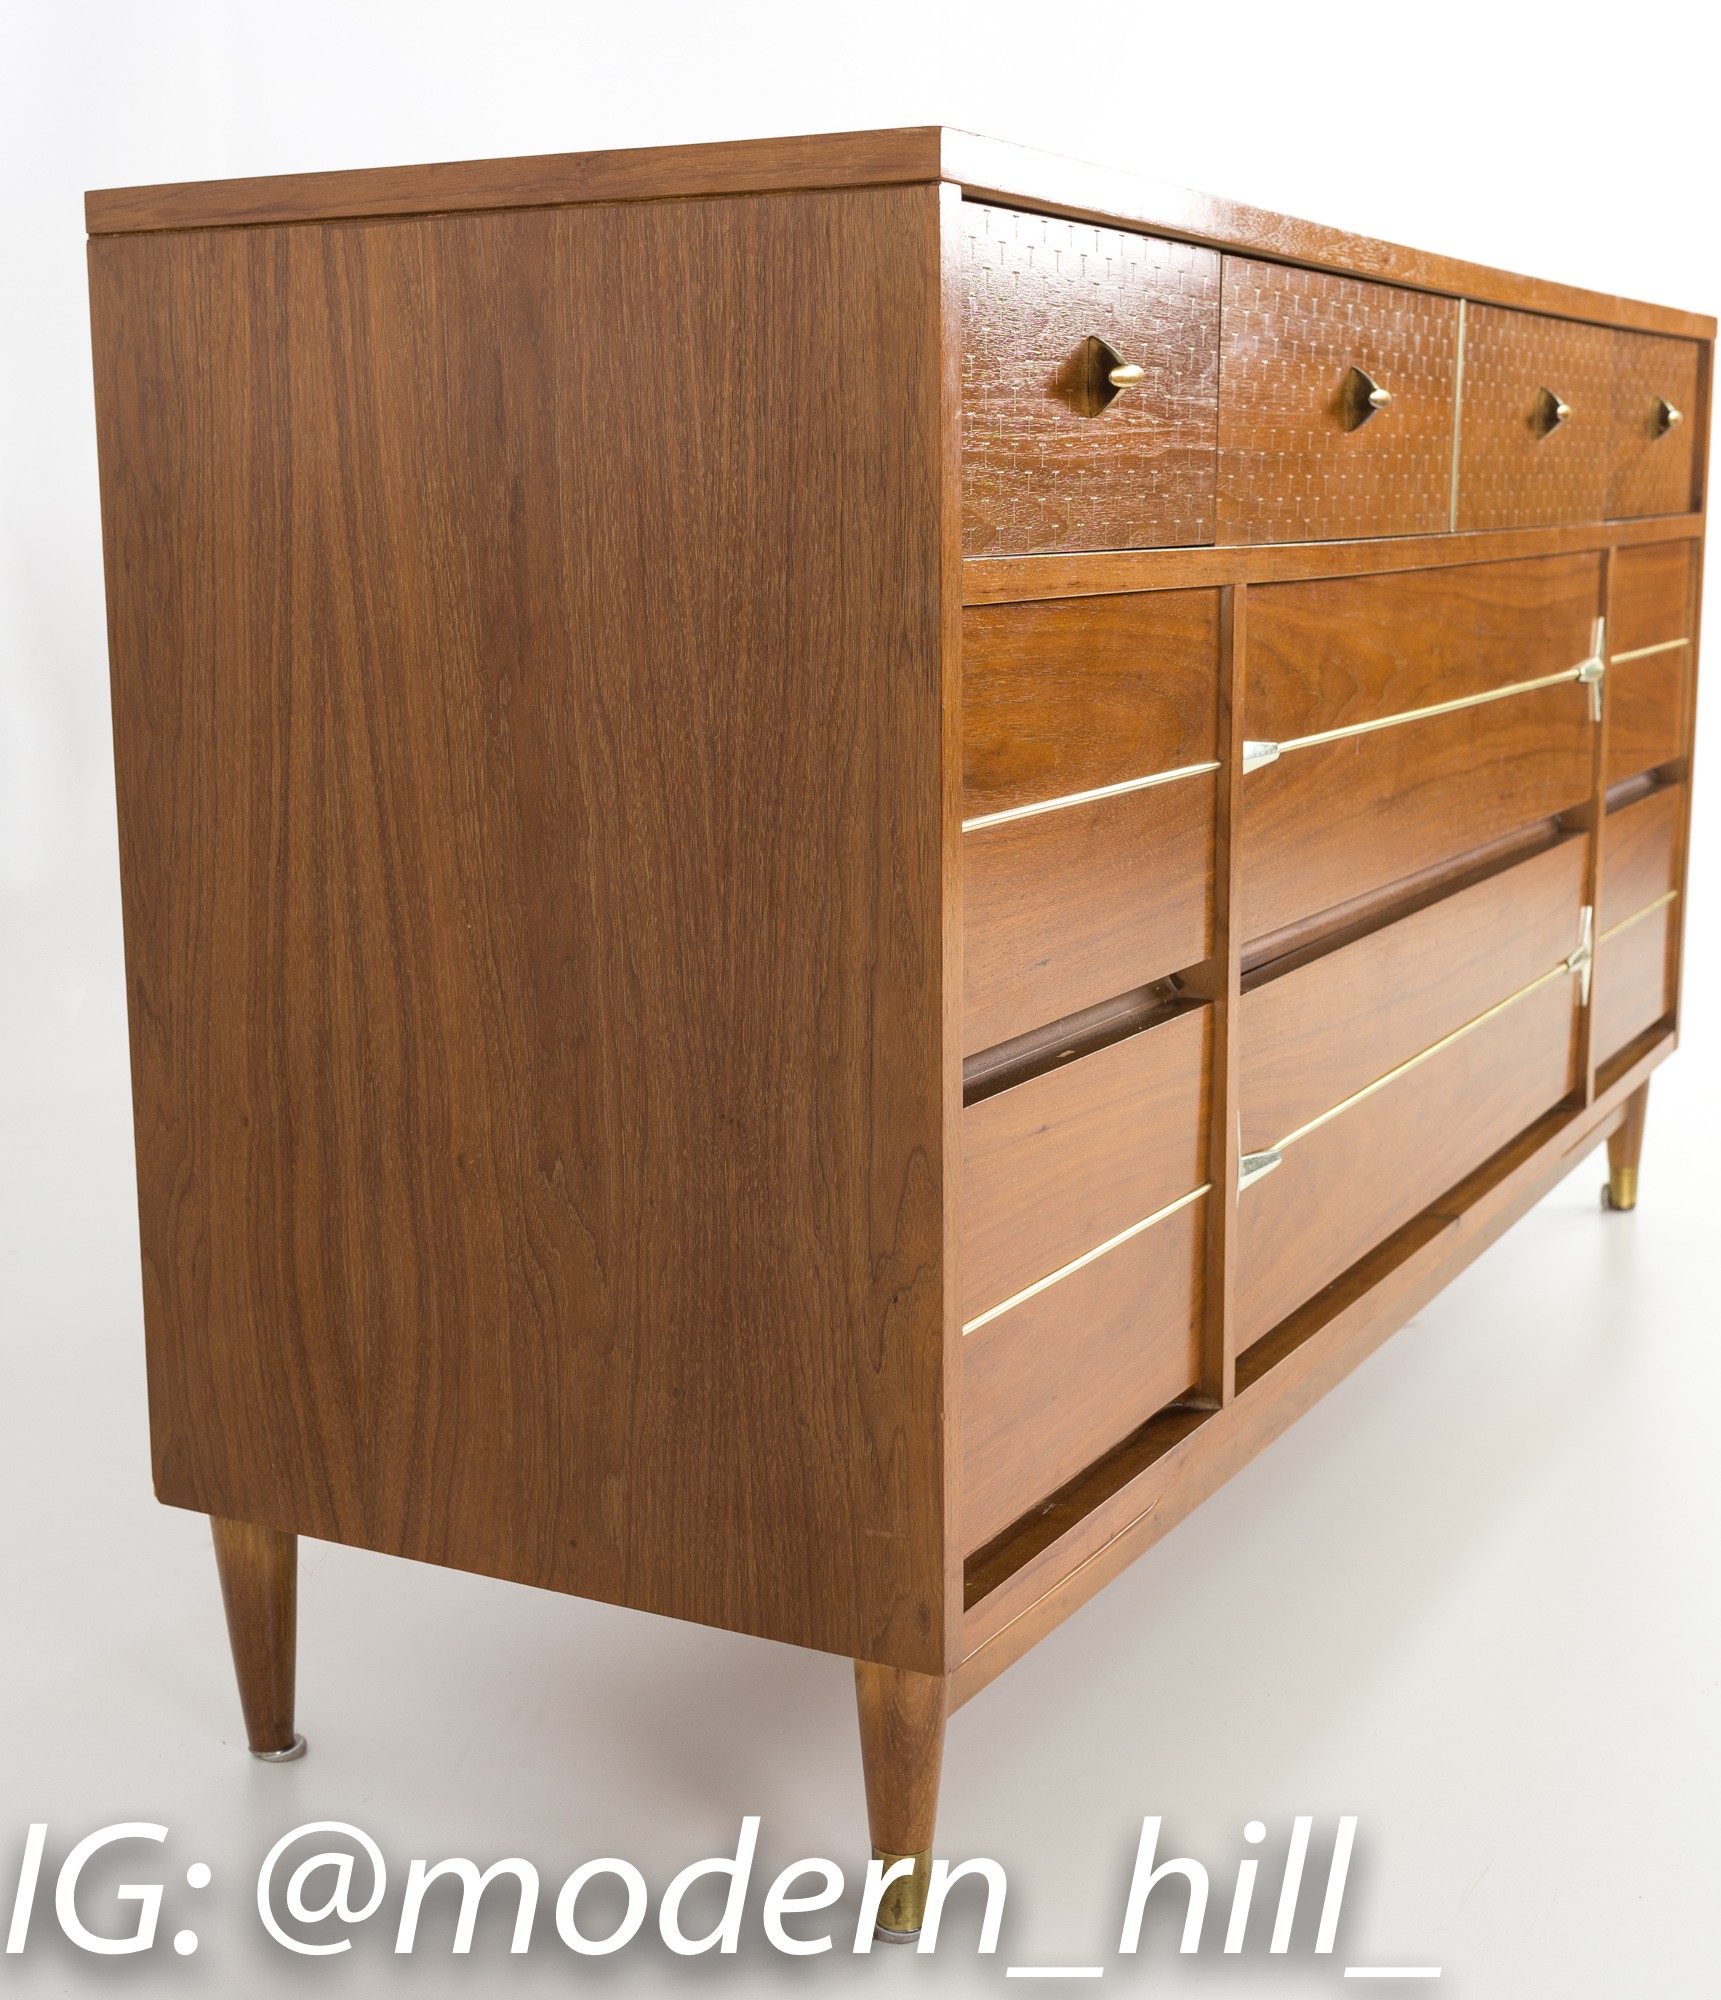 Kroehler Impression Mid Century Walnut and Brass 9 Drawer Lowboy Dresser Chest of Drawers